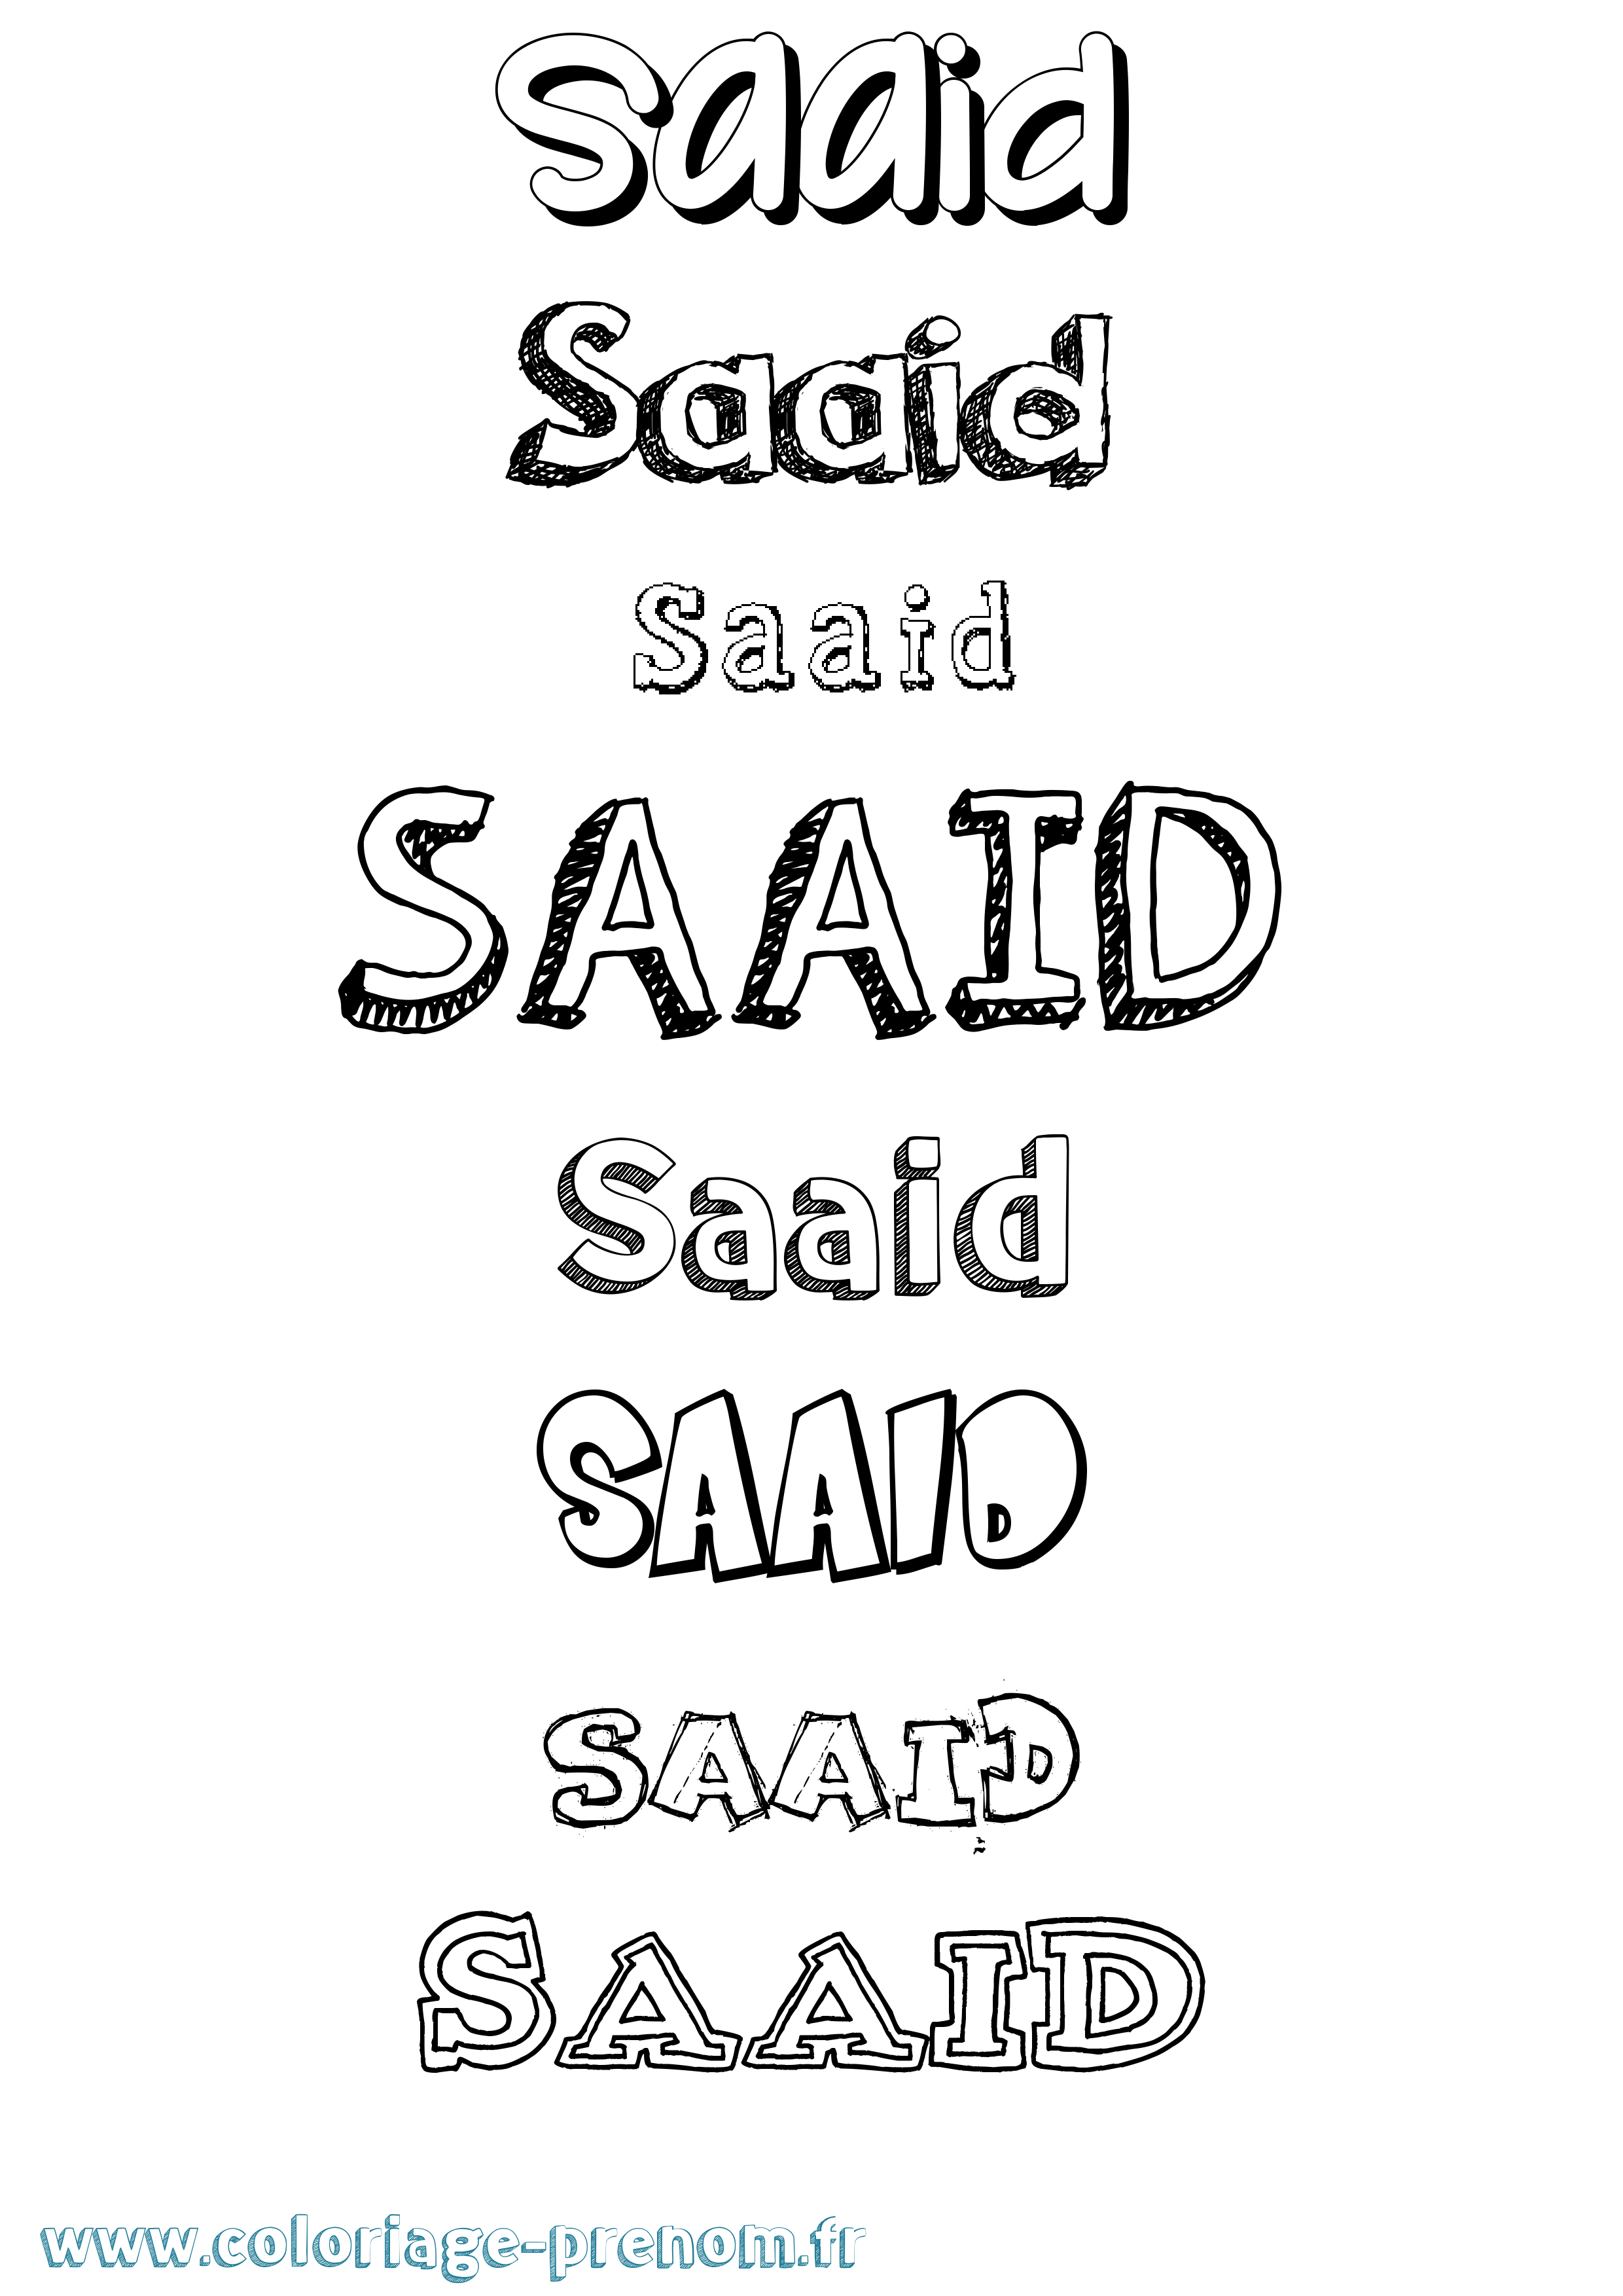 Coloriage prénom Saaid Dessiné